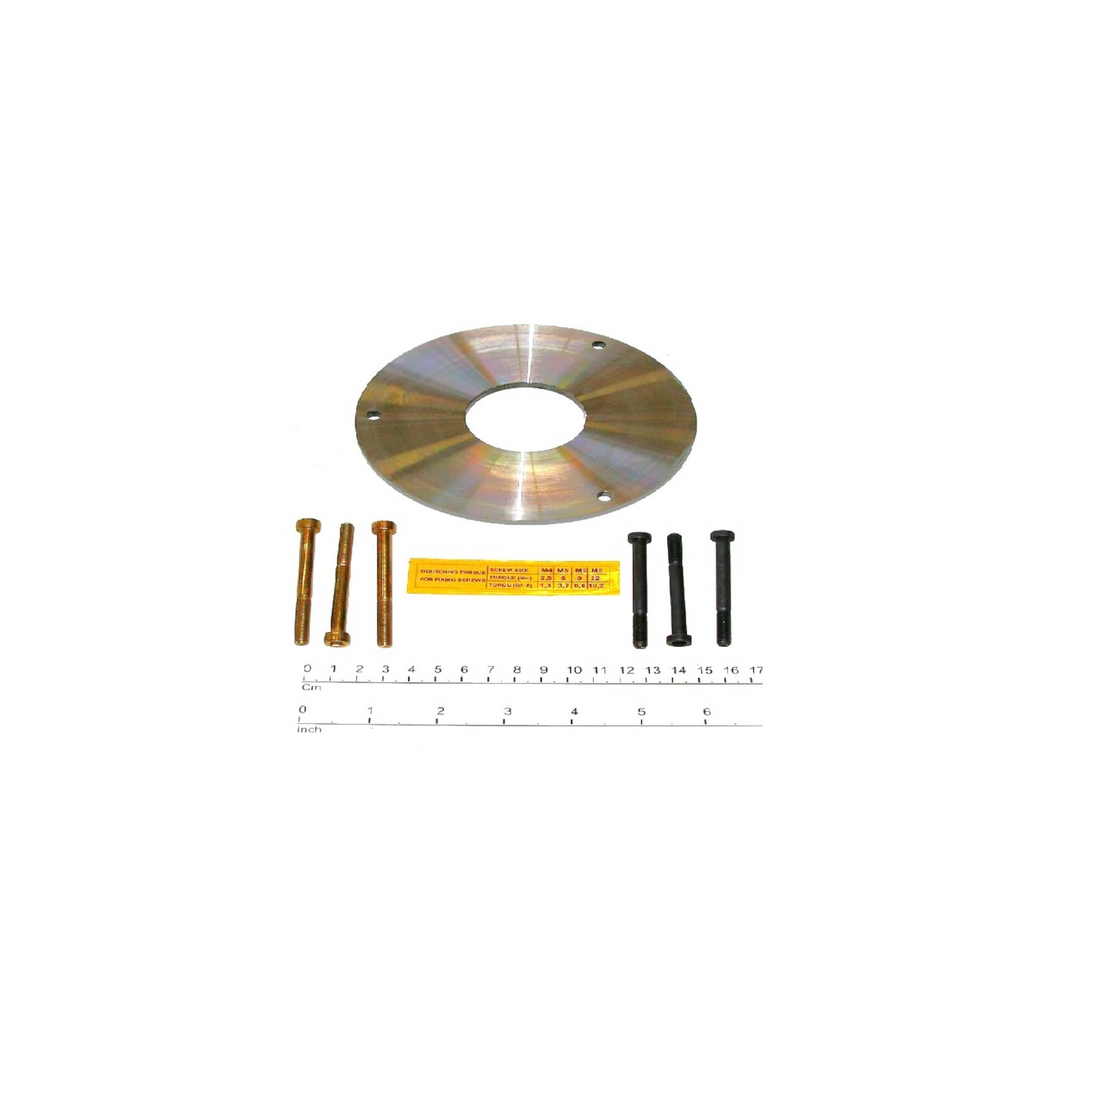 R&M Parts - Friction Disc, Part Number: 3000000242